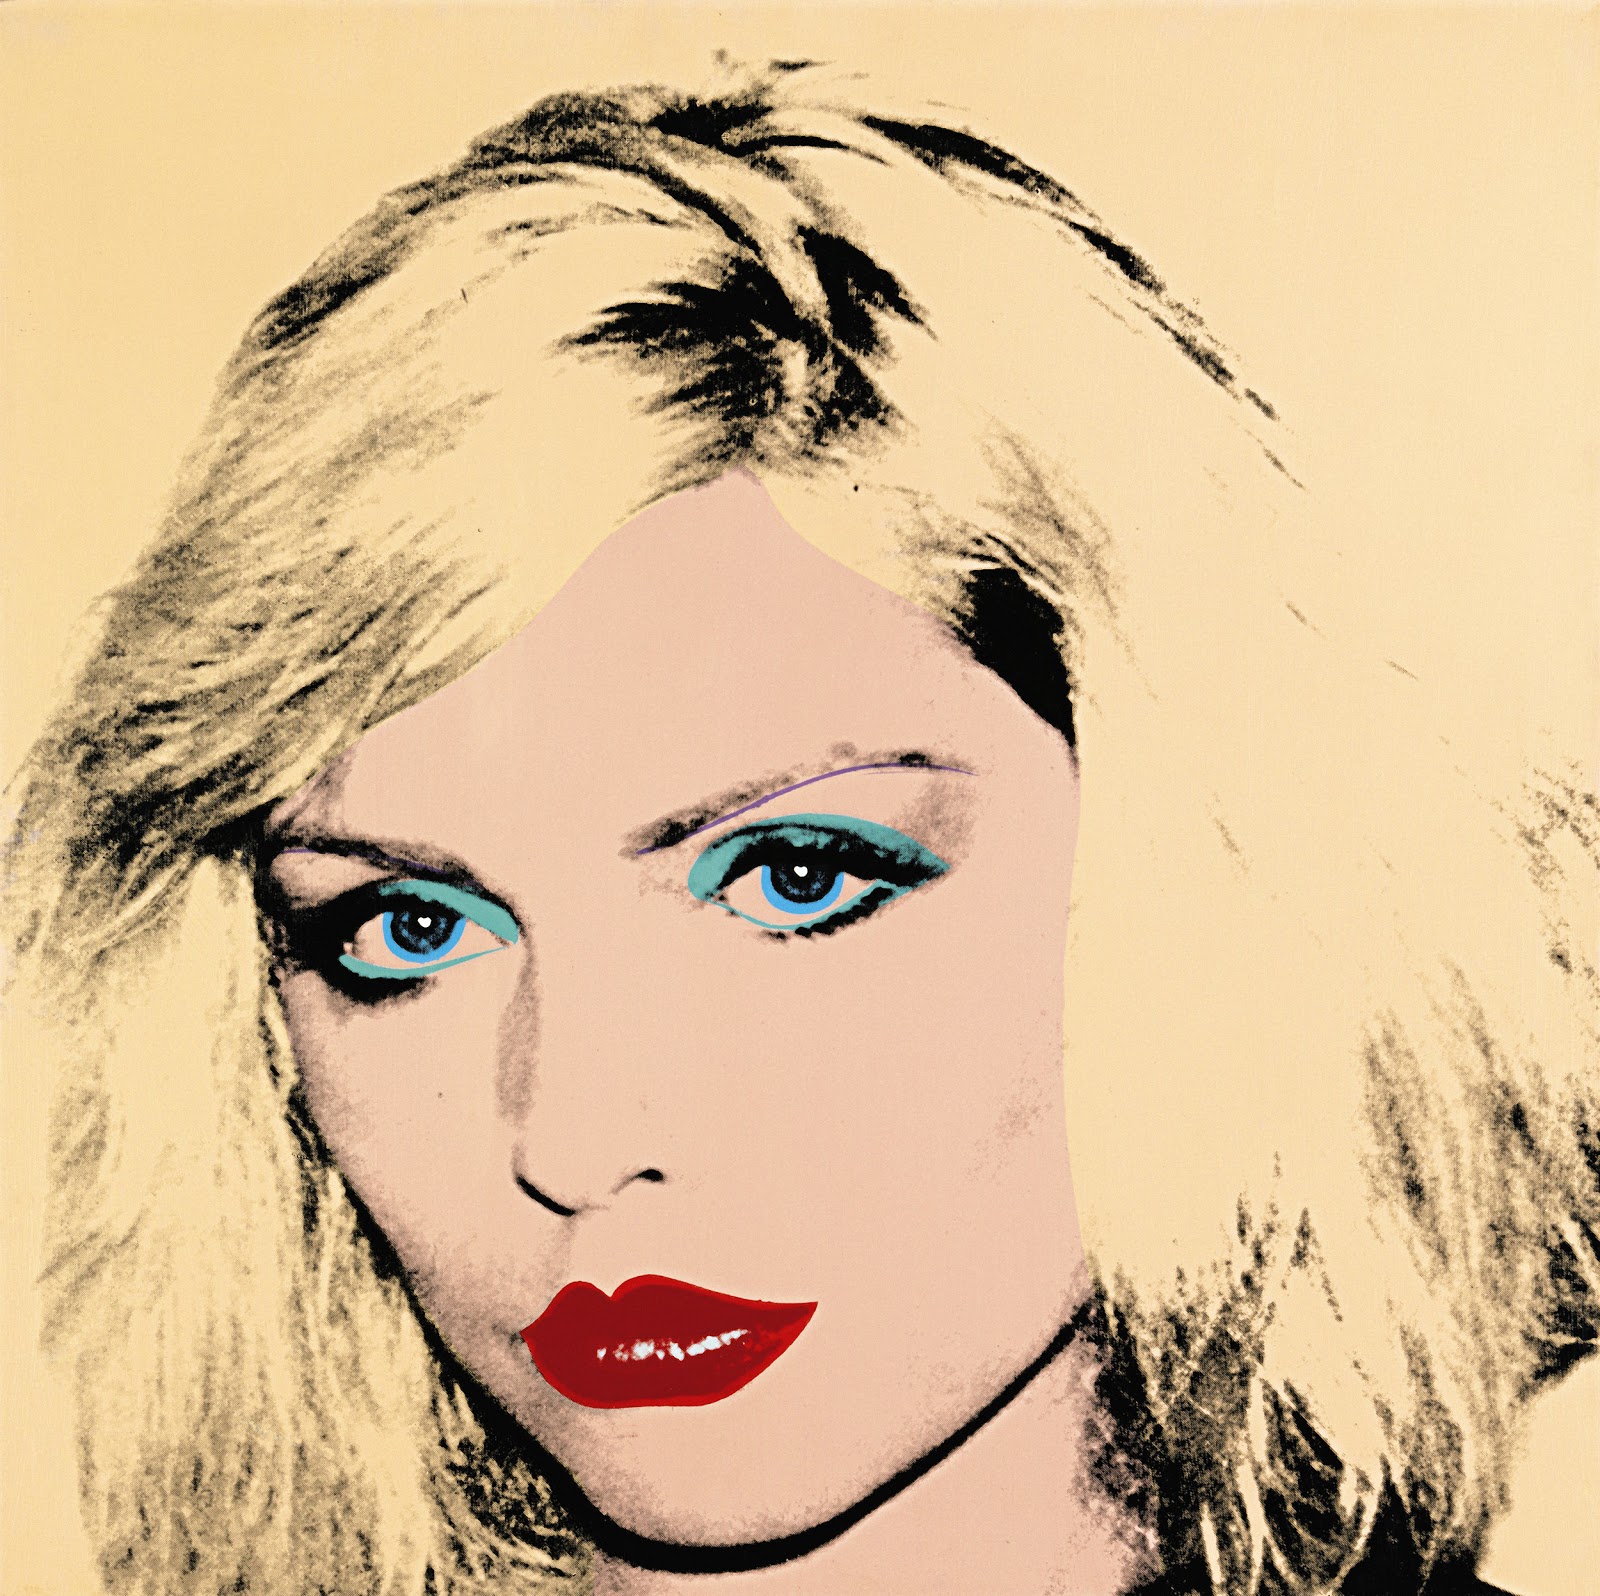 Andy+Warhol-1928-1987 (31).jpg